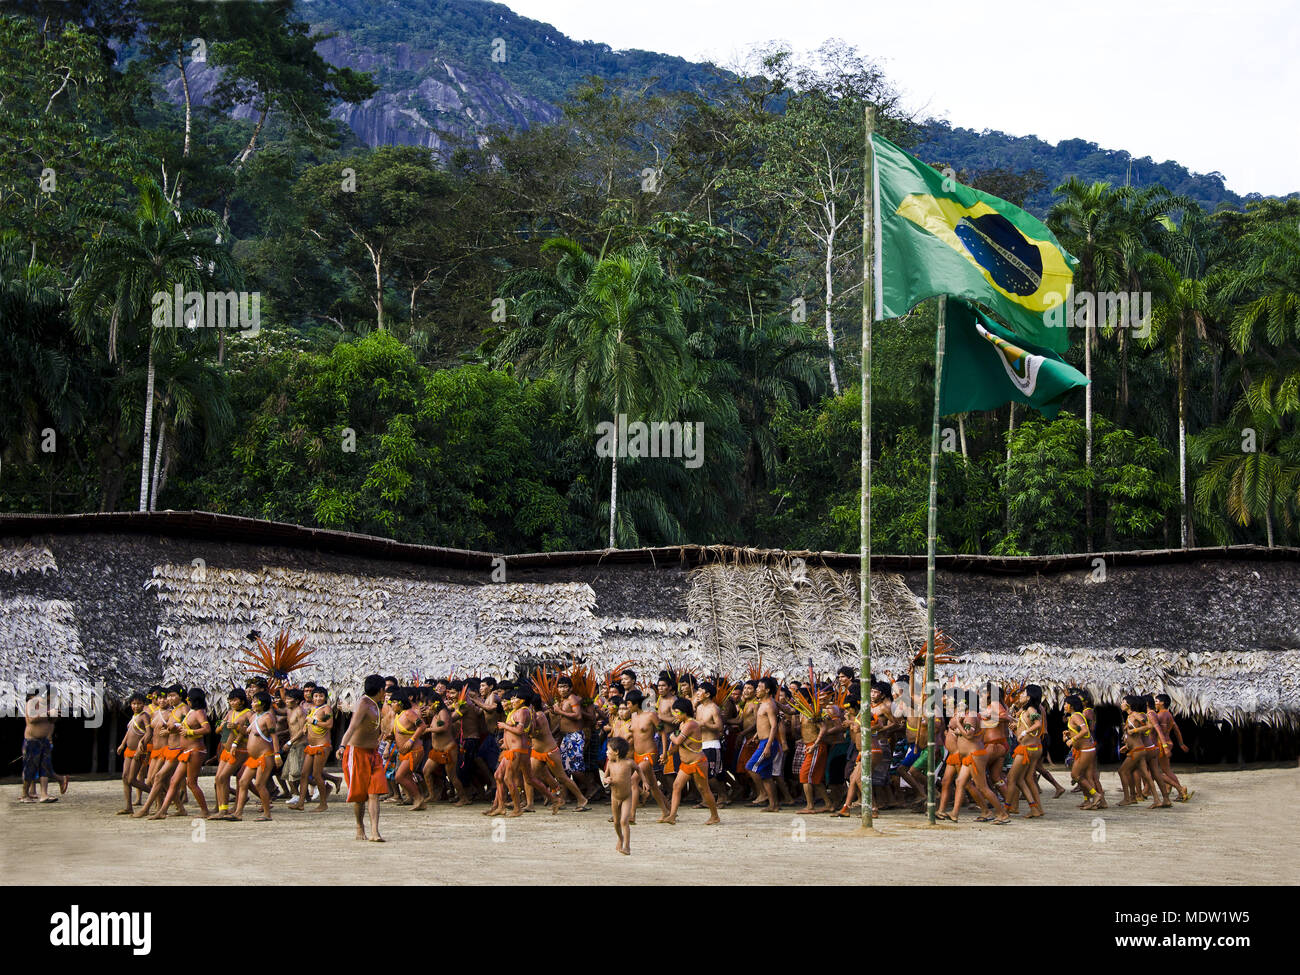 Indians dancing in celeBrazilation of 2'0 years of demarcation TIY - Terra Indigena Yanomami Stock Photo